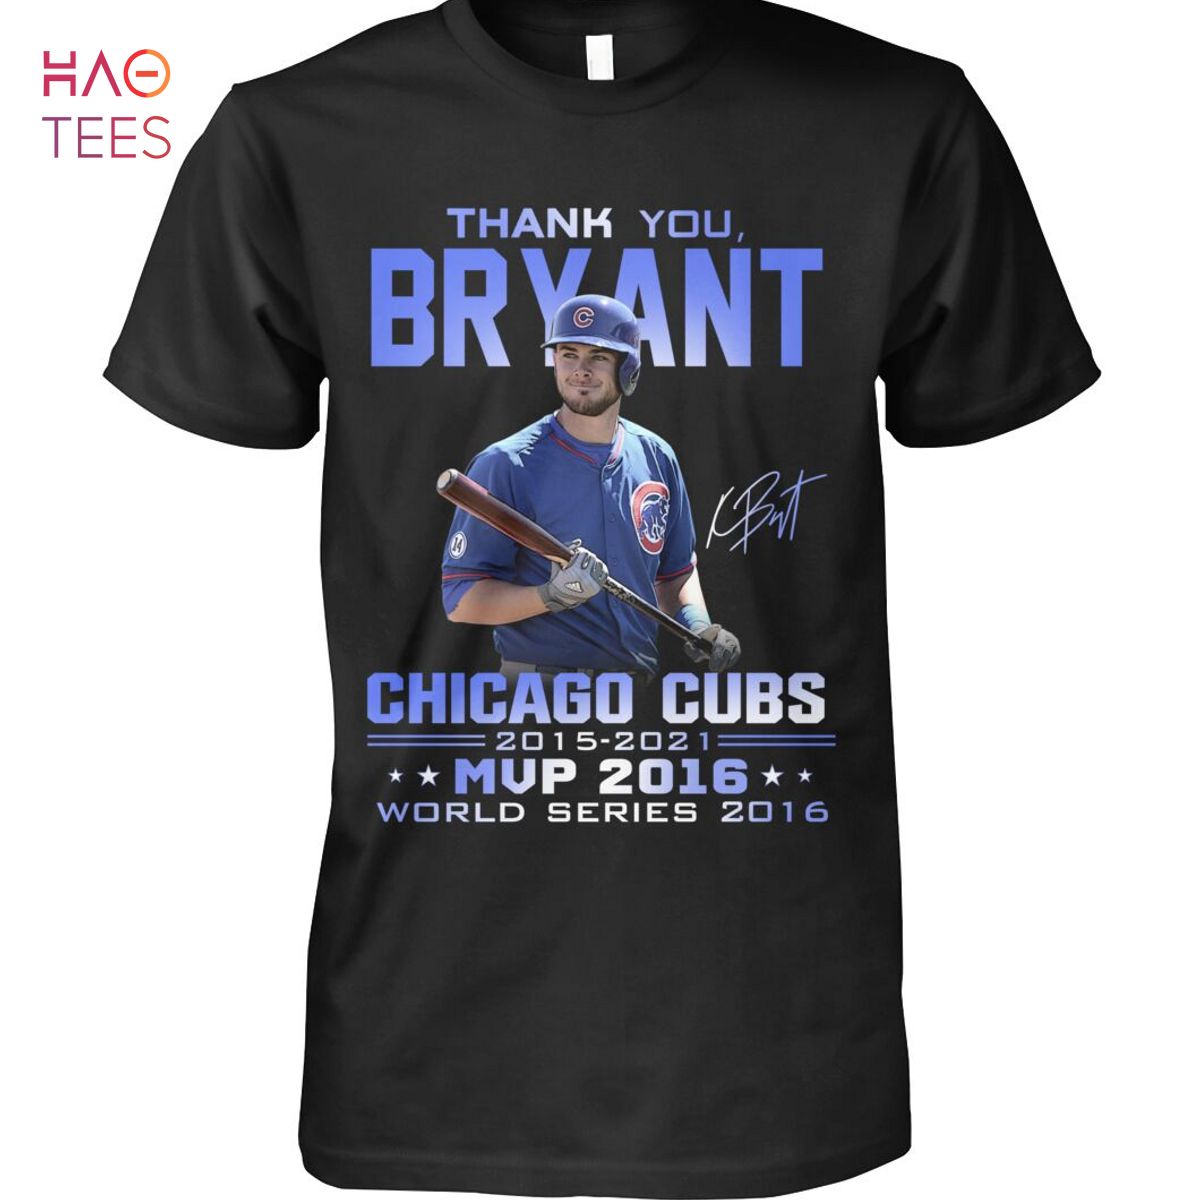 Thank You Bryant Chiacago Cubs 2015 2021 MVP 2016 World Series 2016 Shirt